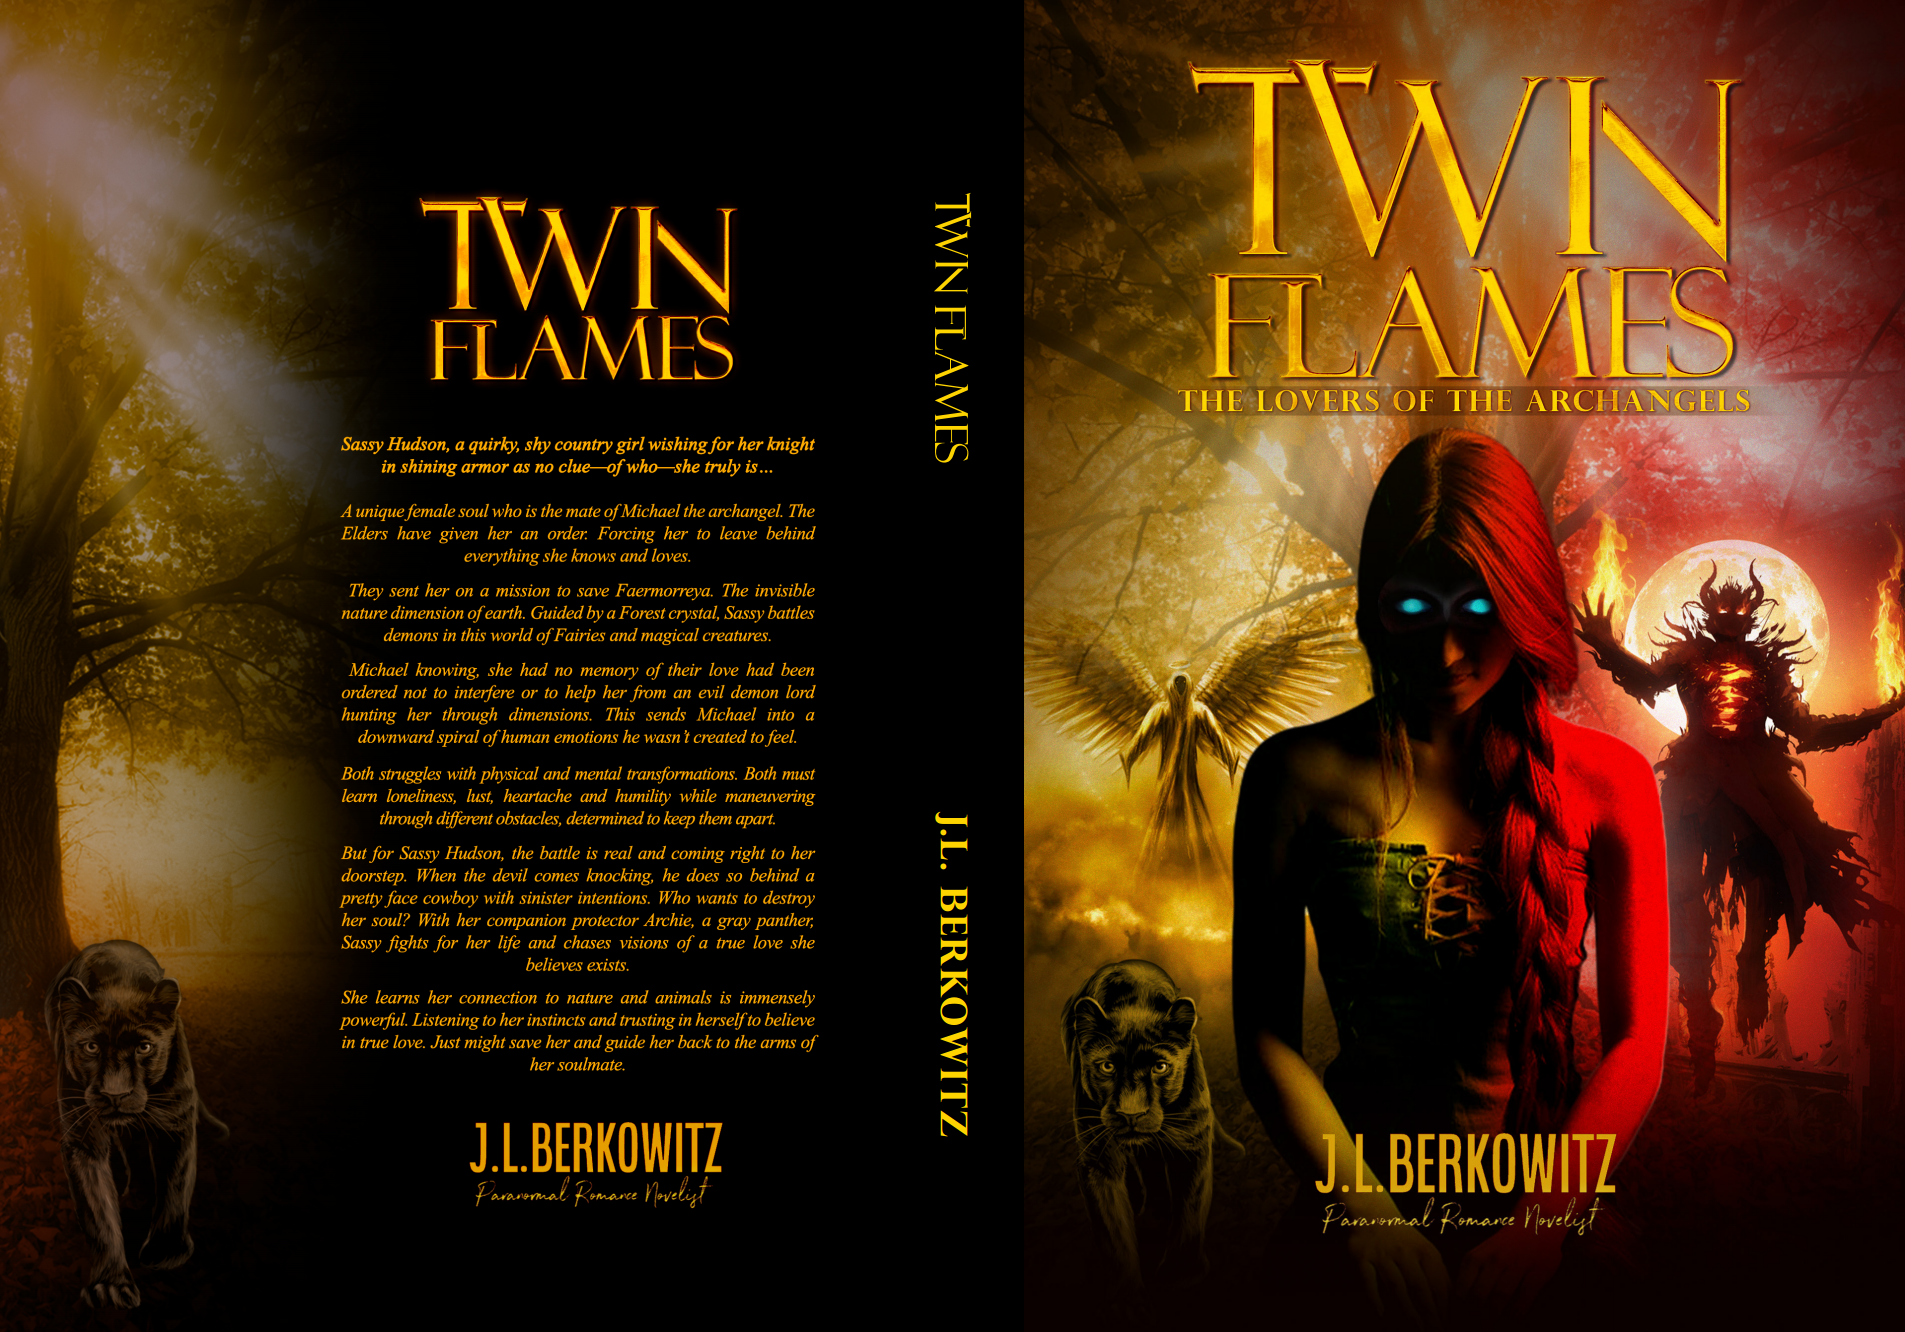 J.L. Berkowitz talks about his new book “Twin Flames” on The Zach Feldman Show